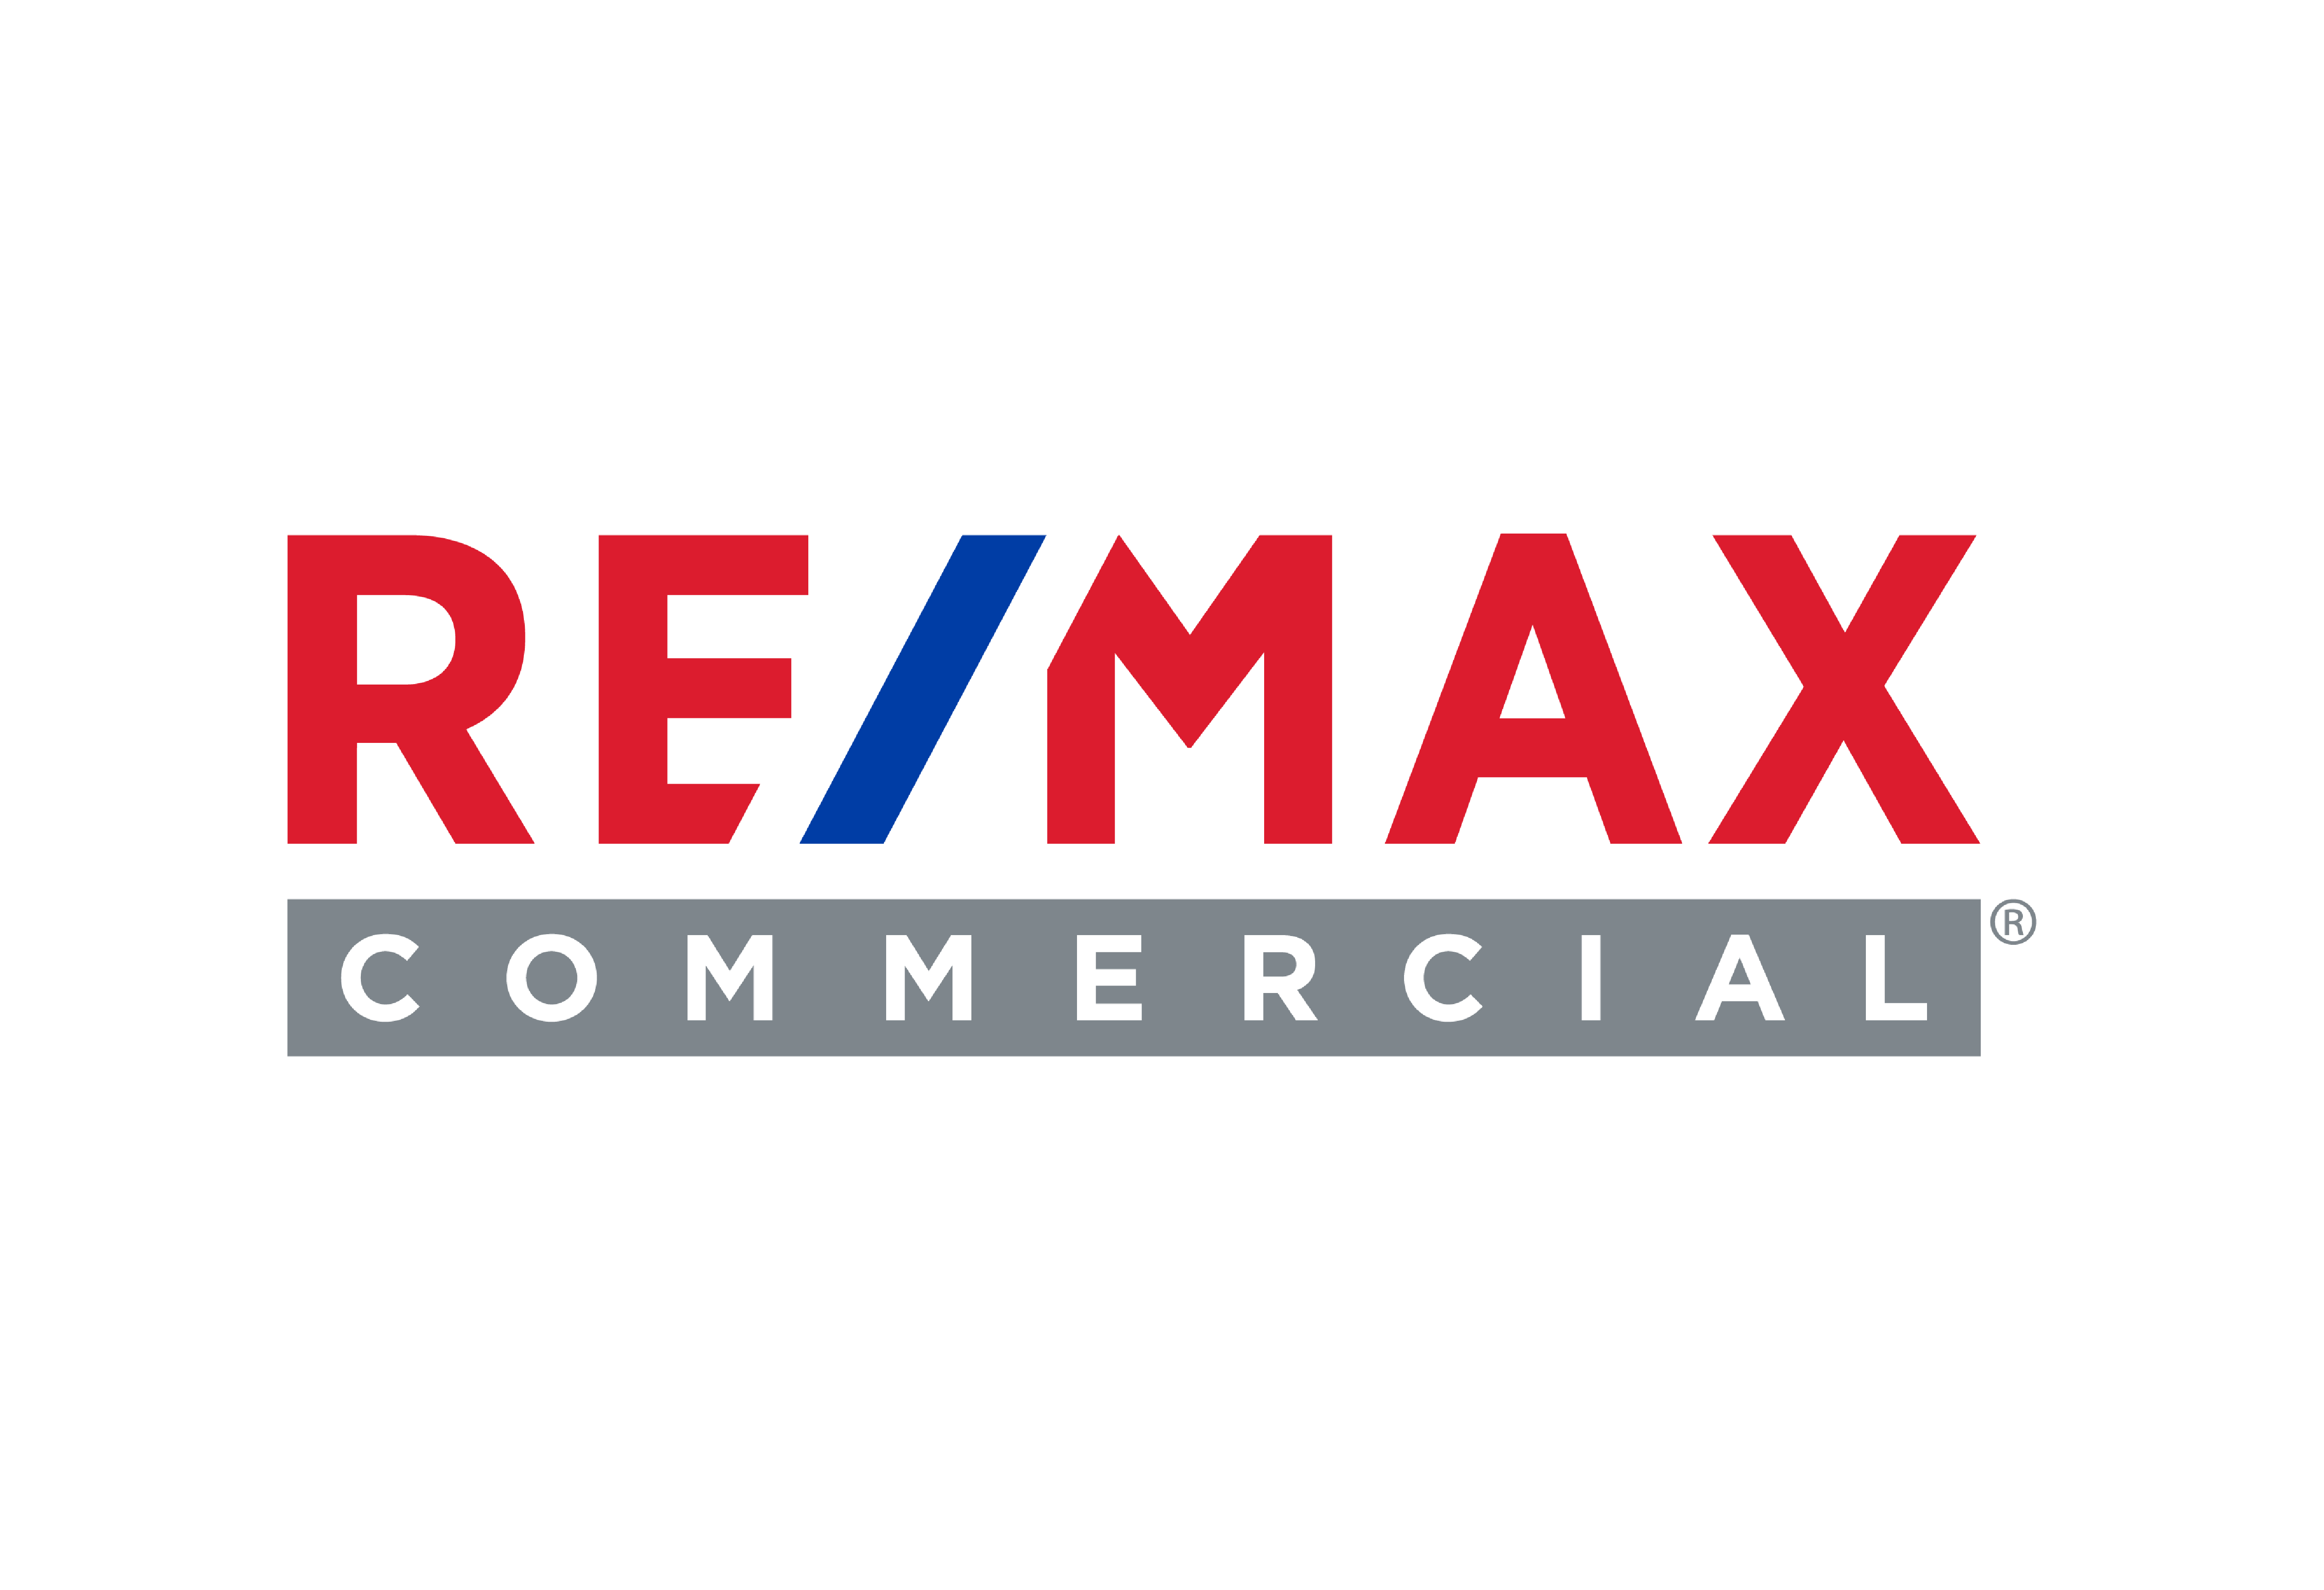 Remax.com Logo - RE/MAX Commercial Included in Prestigious Survey | RE/MAX Newsroom